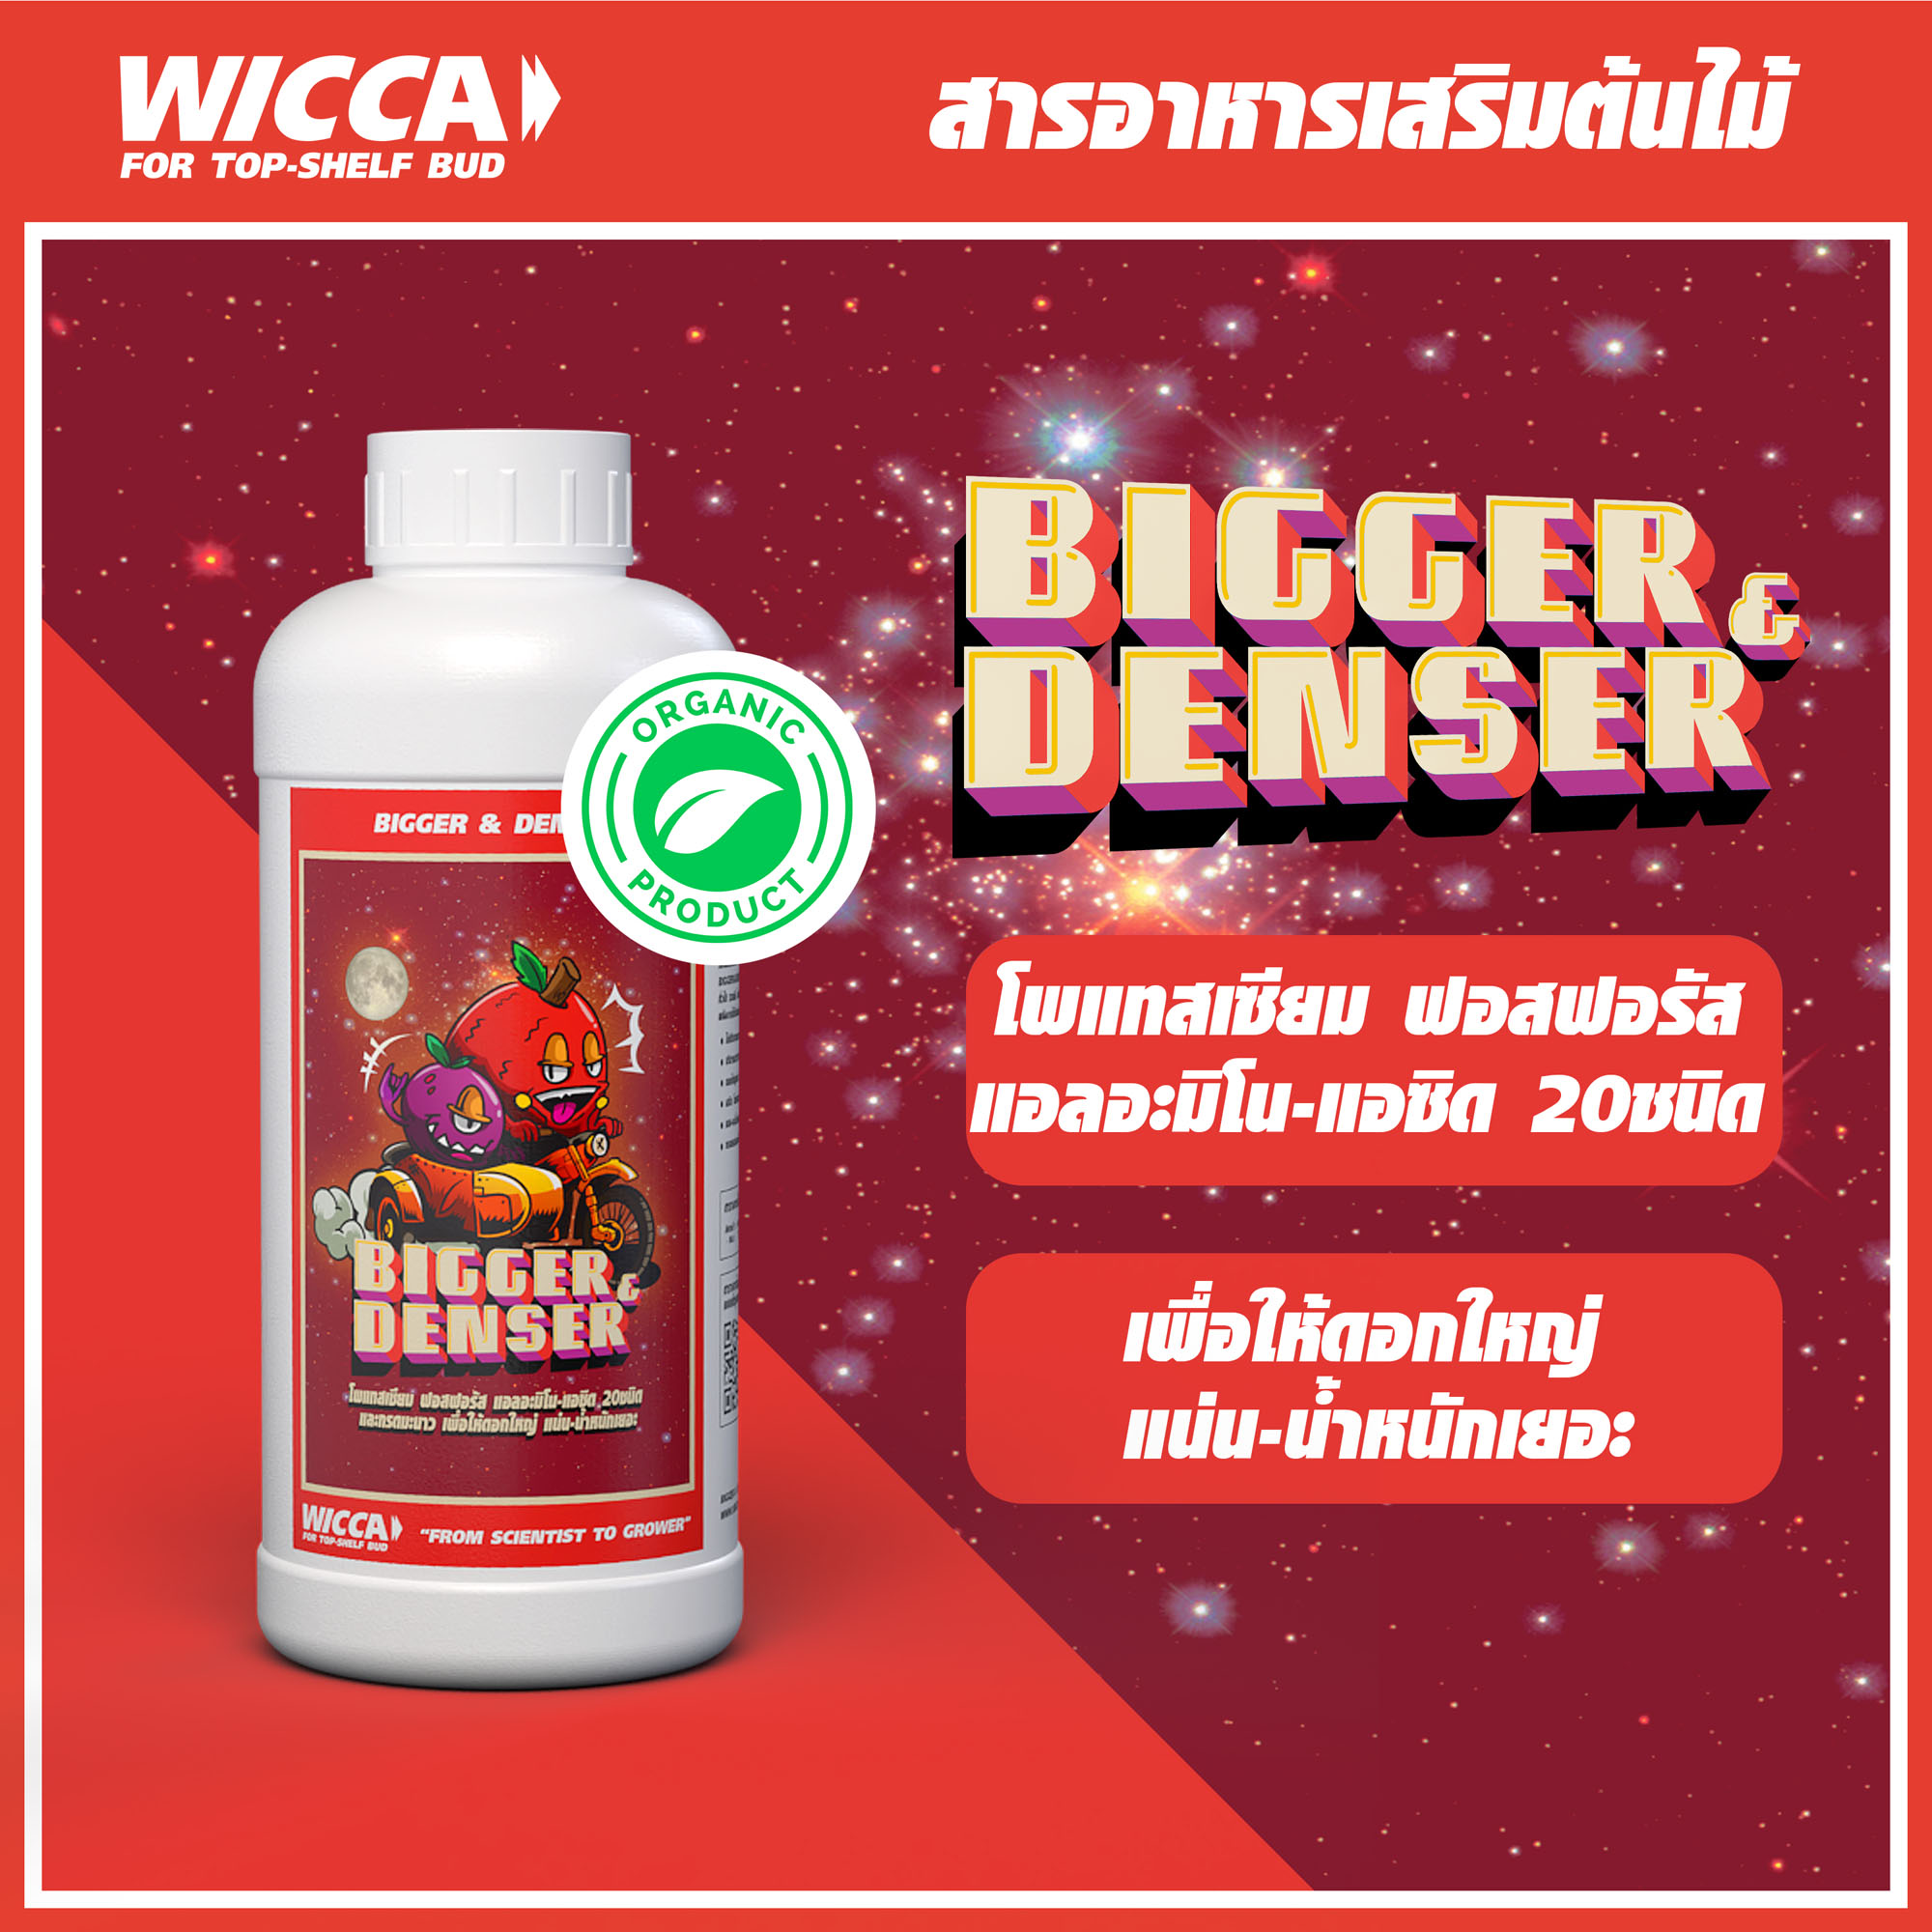 WICCA ADS COVER - BIGGER